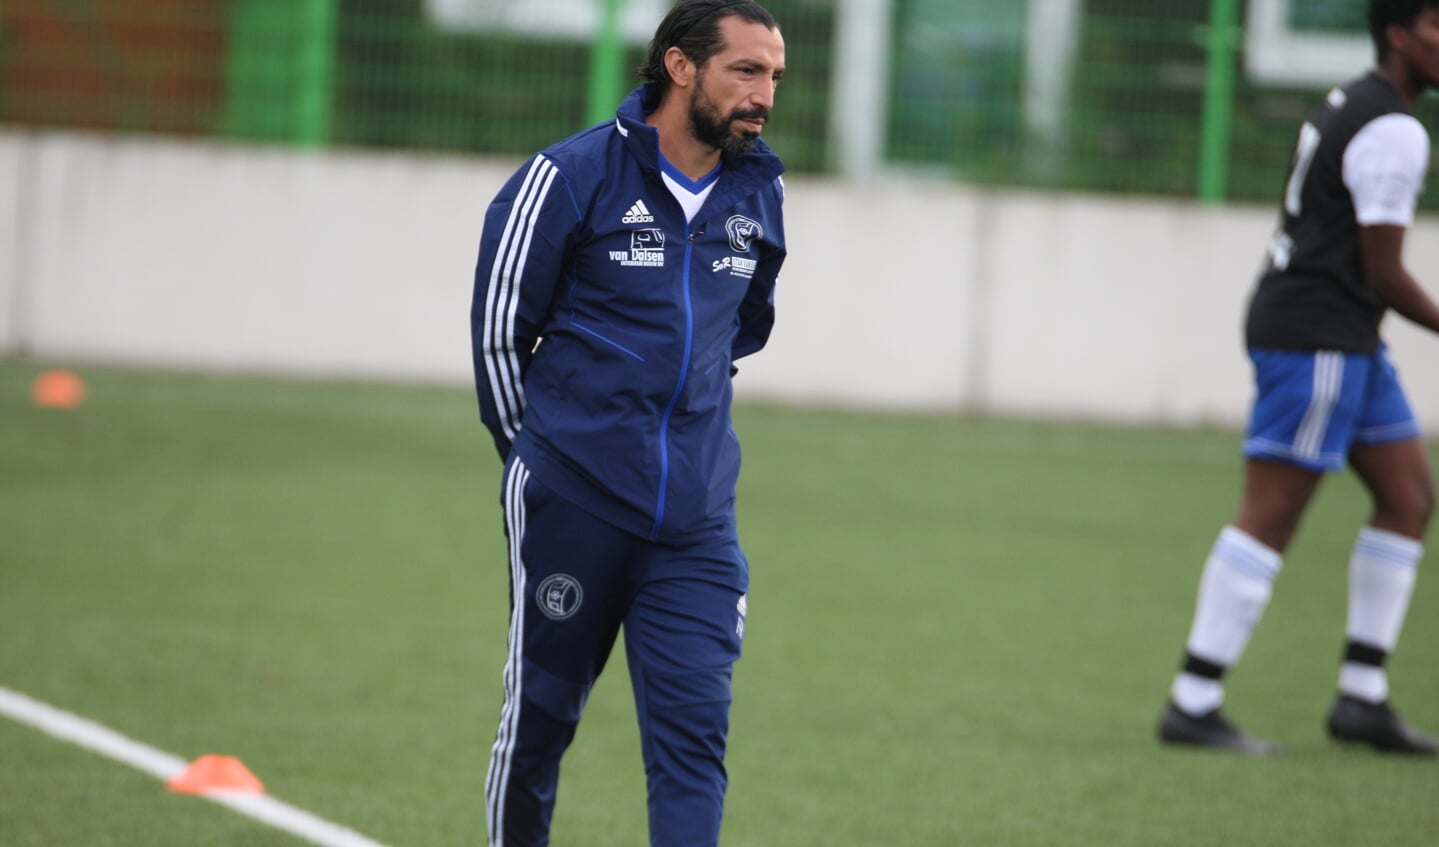 CHC-trainer Fatah Hadouir